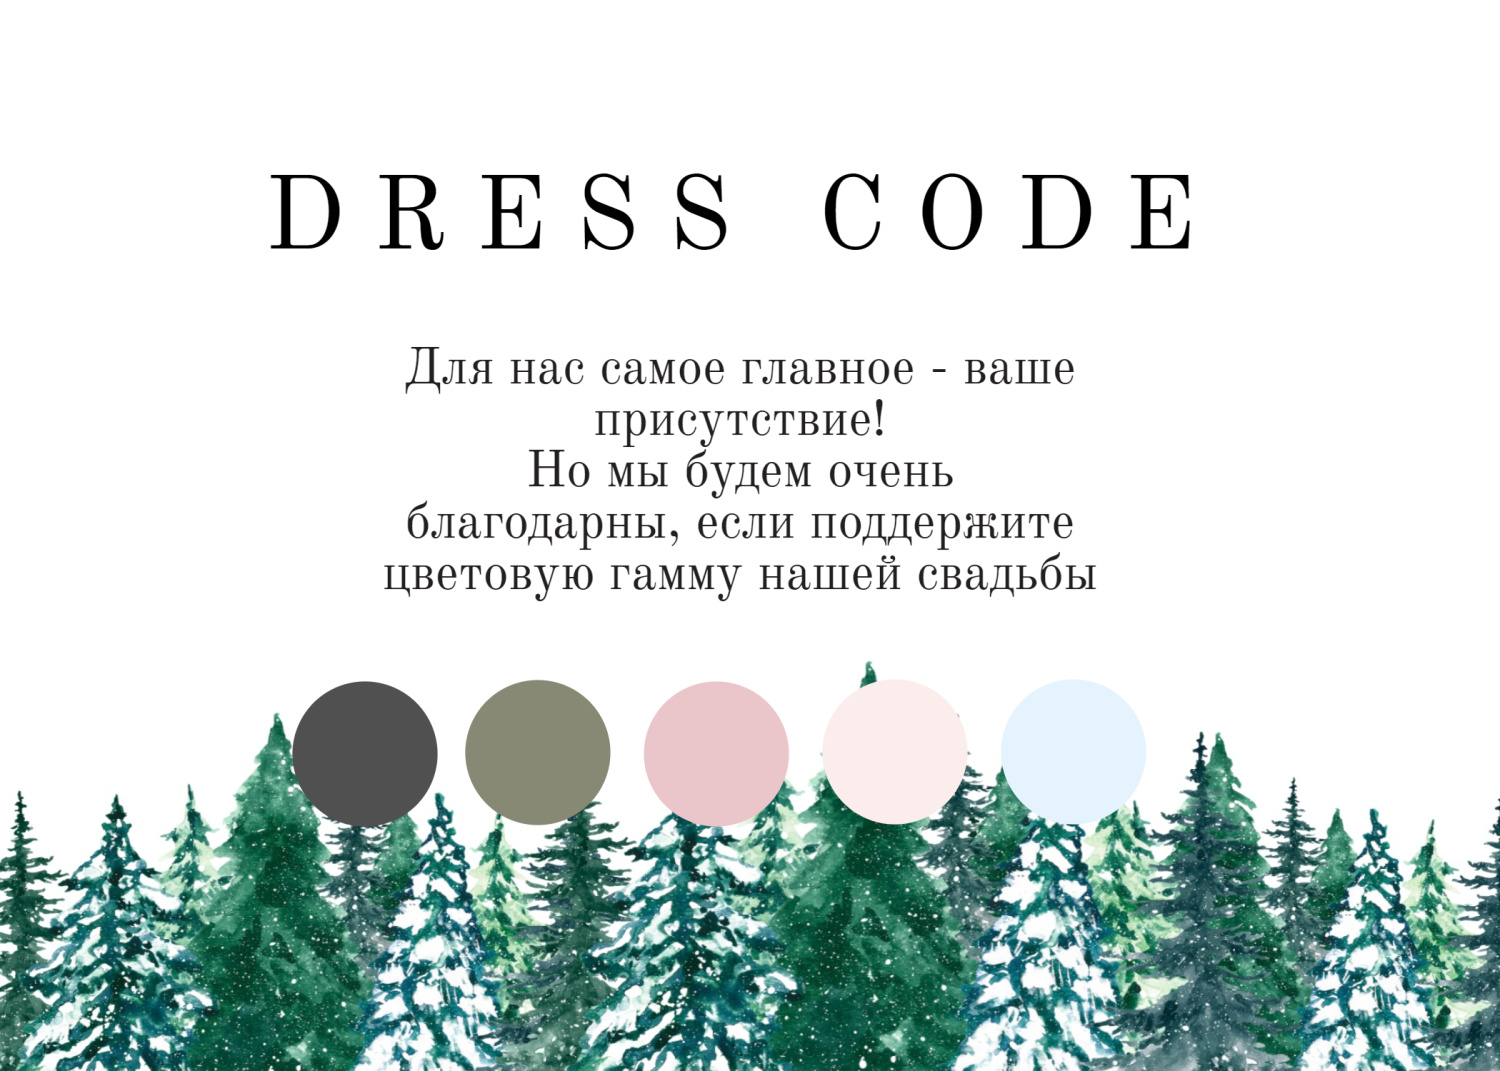 Дресс-код с зимним еловым лесом